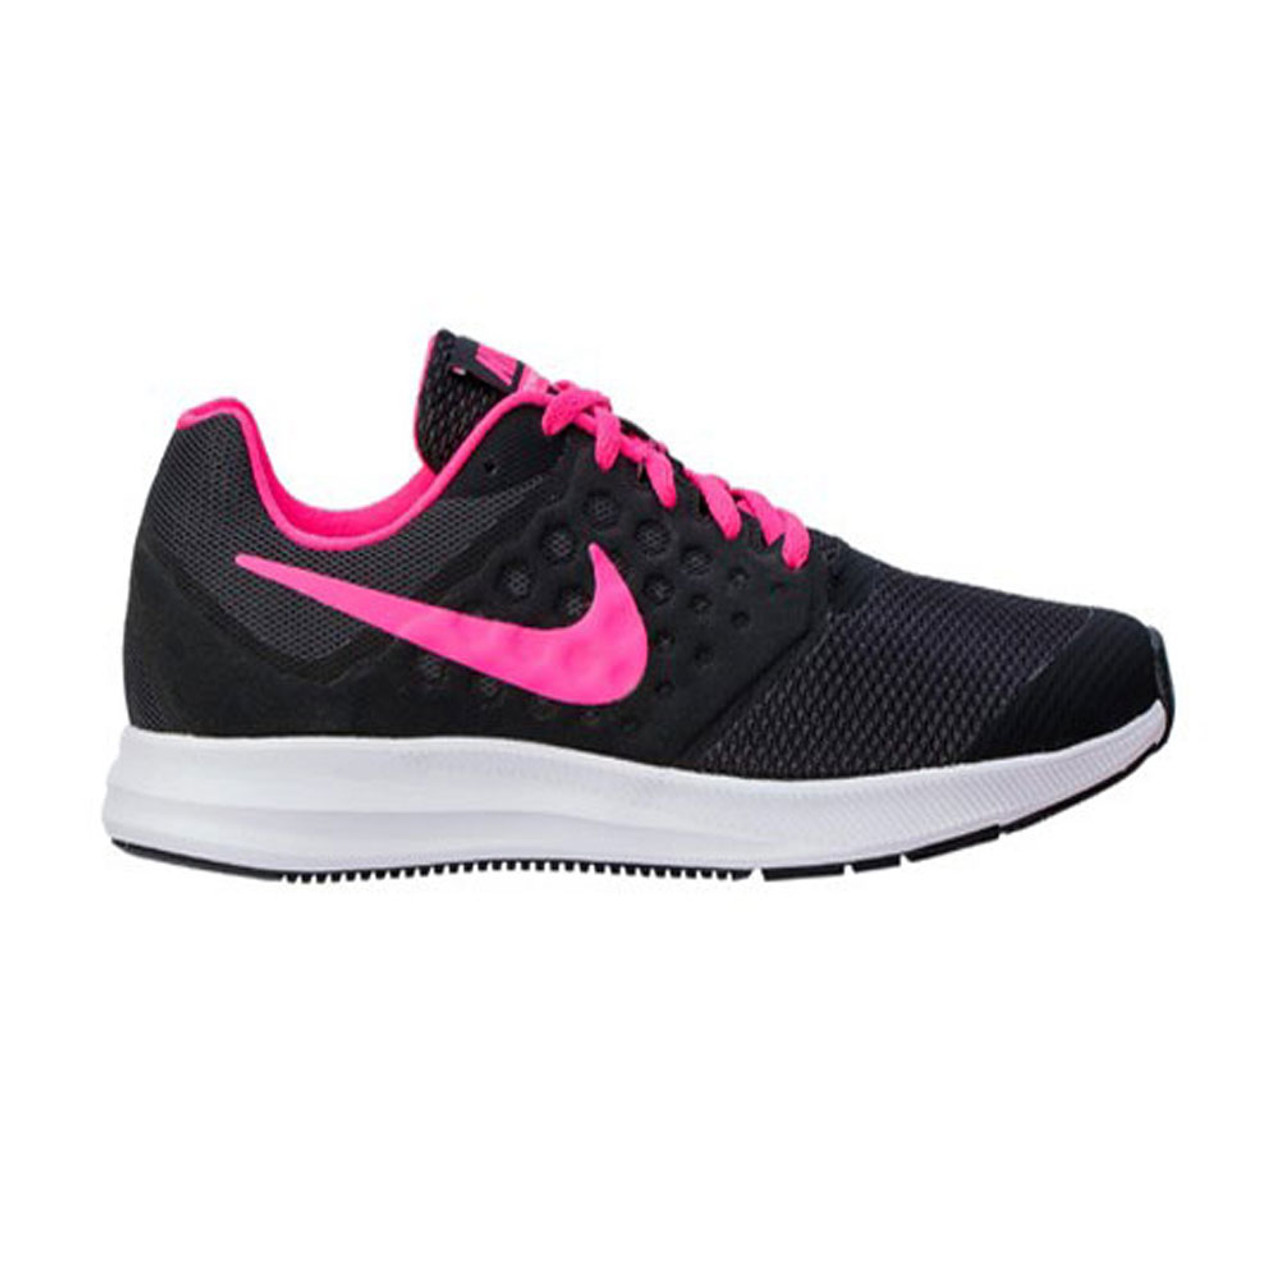 Mata autobiografía Reciclar Nike Girl's Downshifter 7 Athletic Shoe - Black | Discount Nike Childrens  Athletic & More - Shoolu.com | Shoolu.com